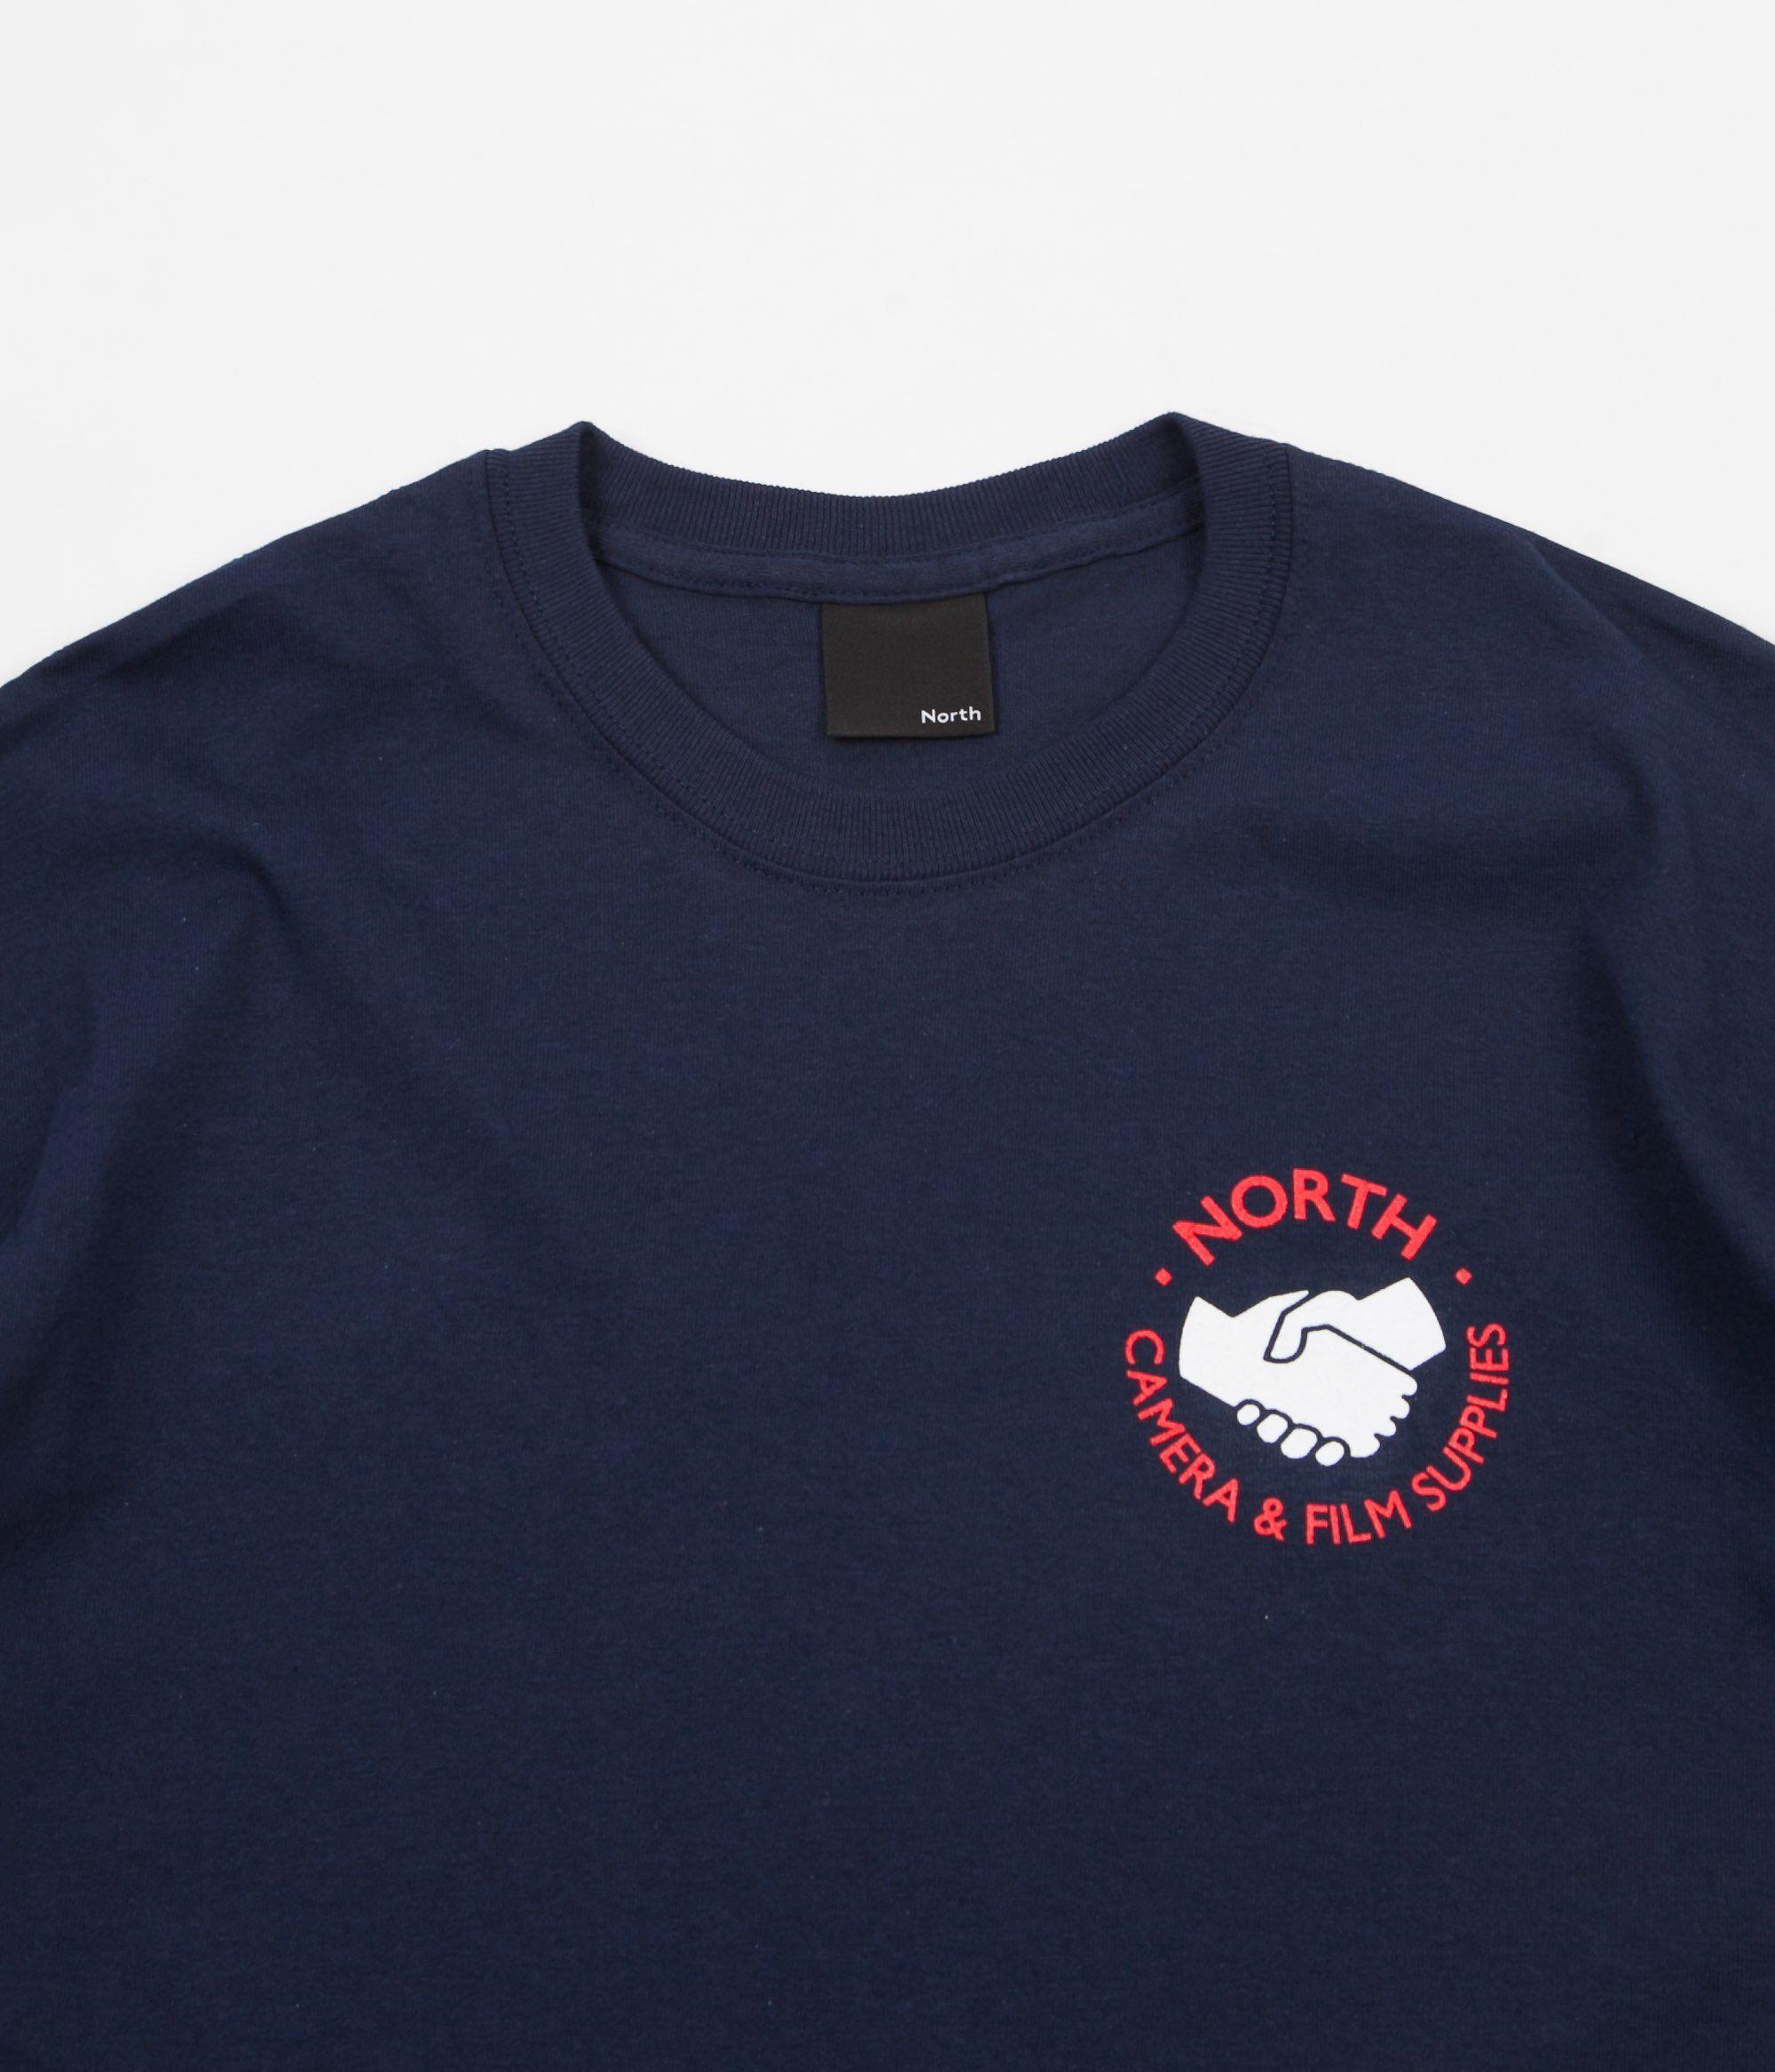 Red Navy Logo - North Skateboard Magazine Supplies Logo T-Shirt - Navy / Red / White ...